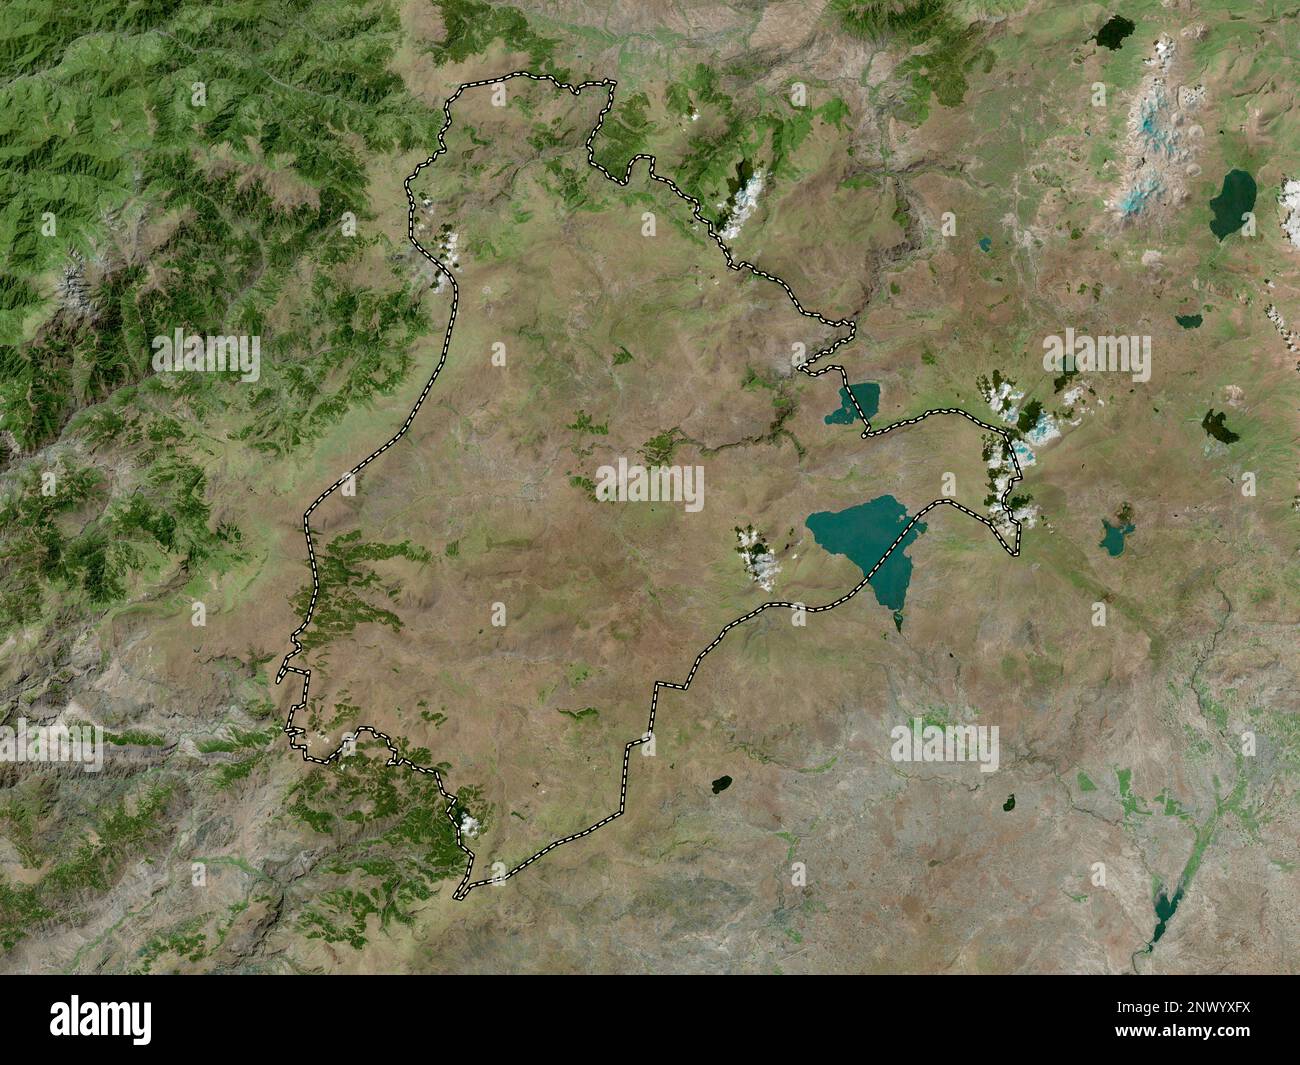 Ardahan, province of Turkiye. High resolution satellite map Stock Photo